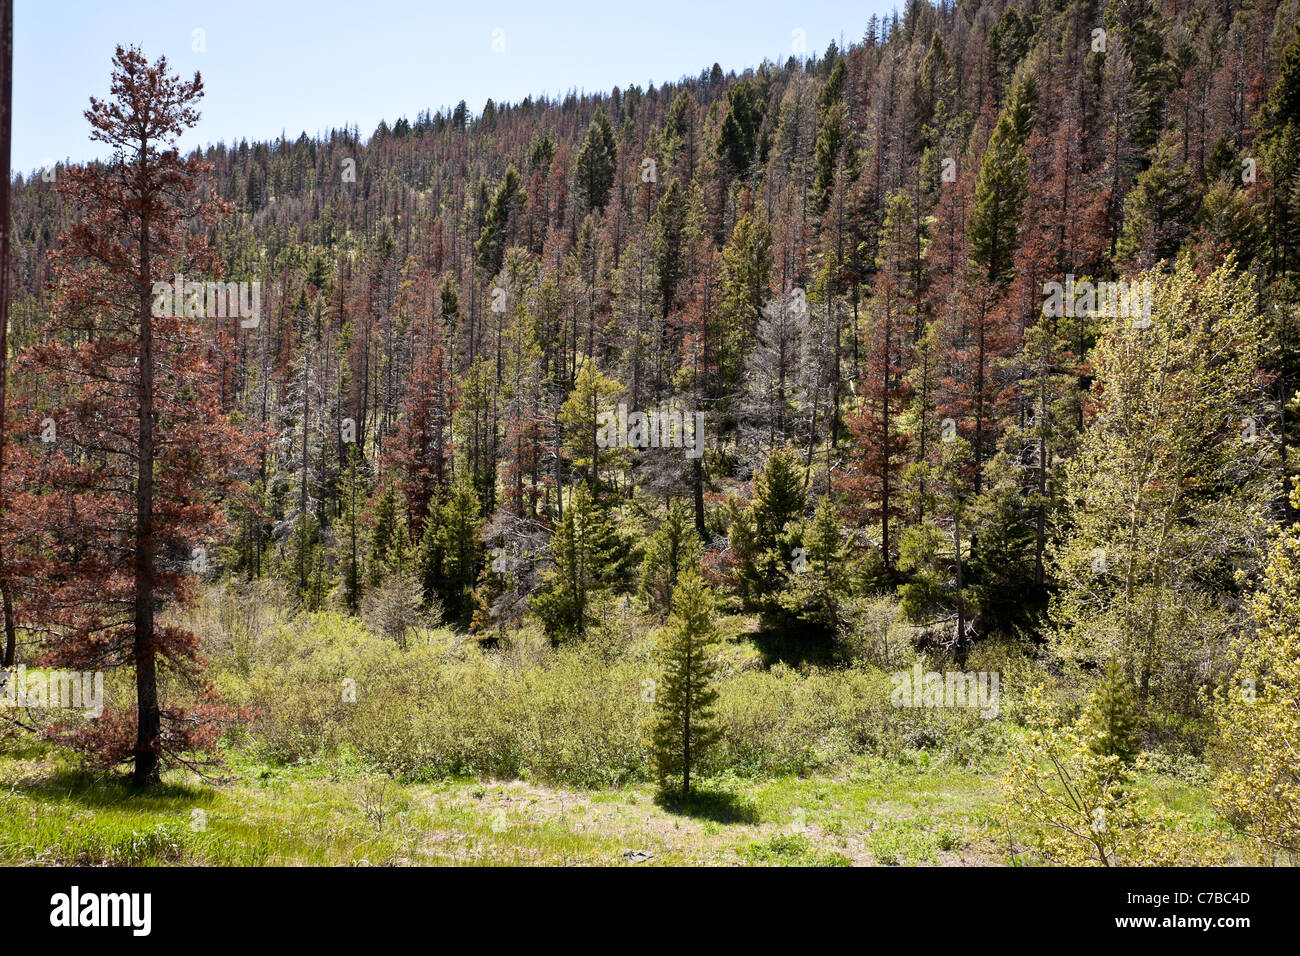 Dead Evergreen Trees from Mountain Pine Beetle Infestation, RTE 200, Montana, USA Stock Photo